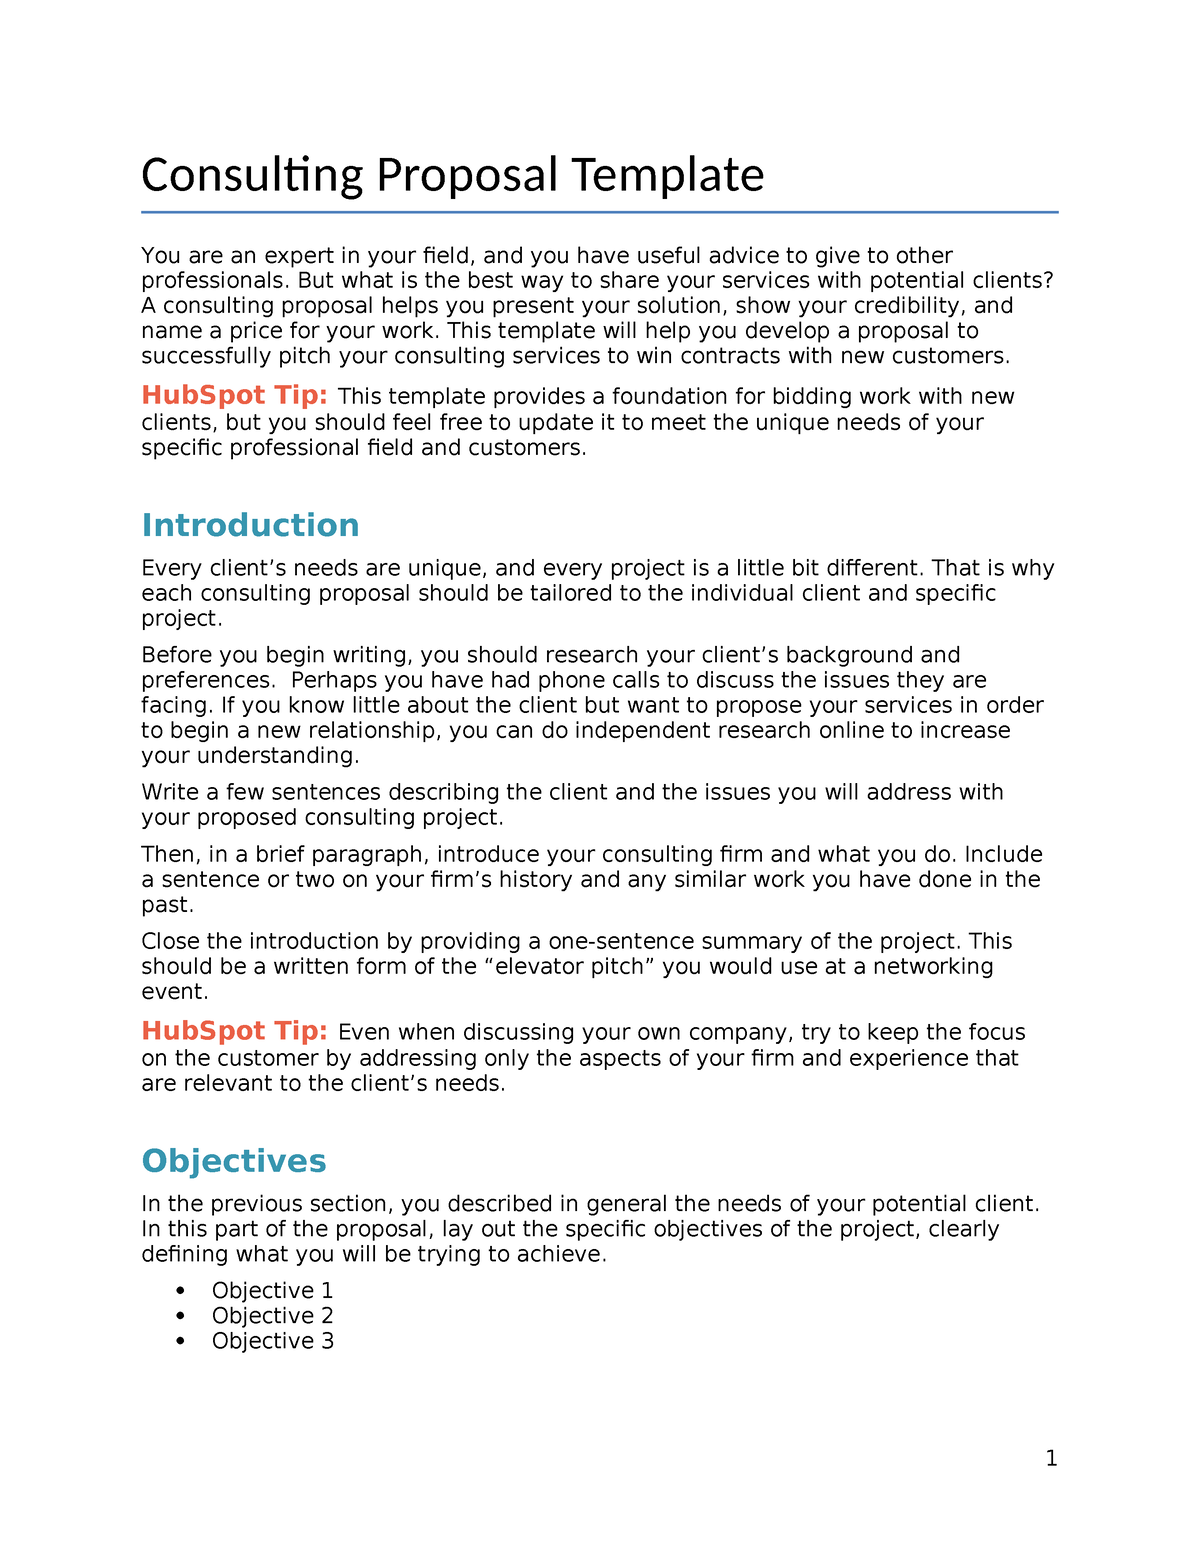 Plantilla propuesta consultor - Consulting Proposal Template You are an ...